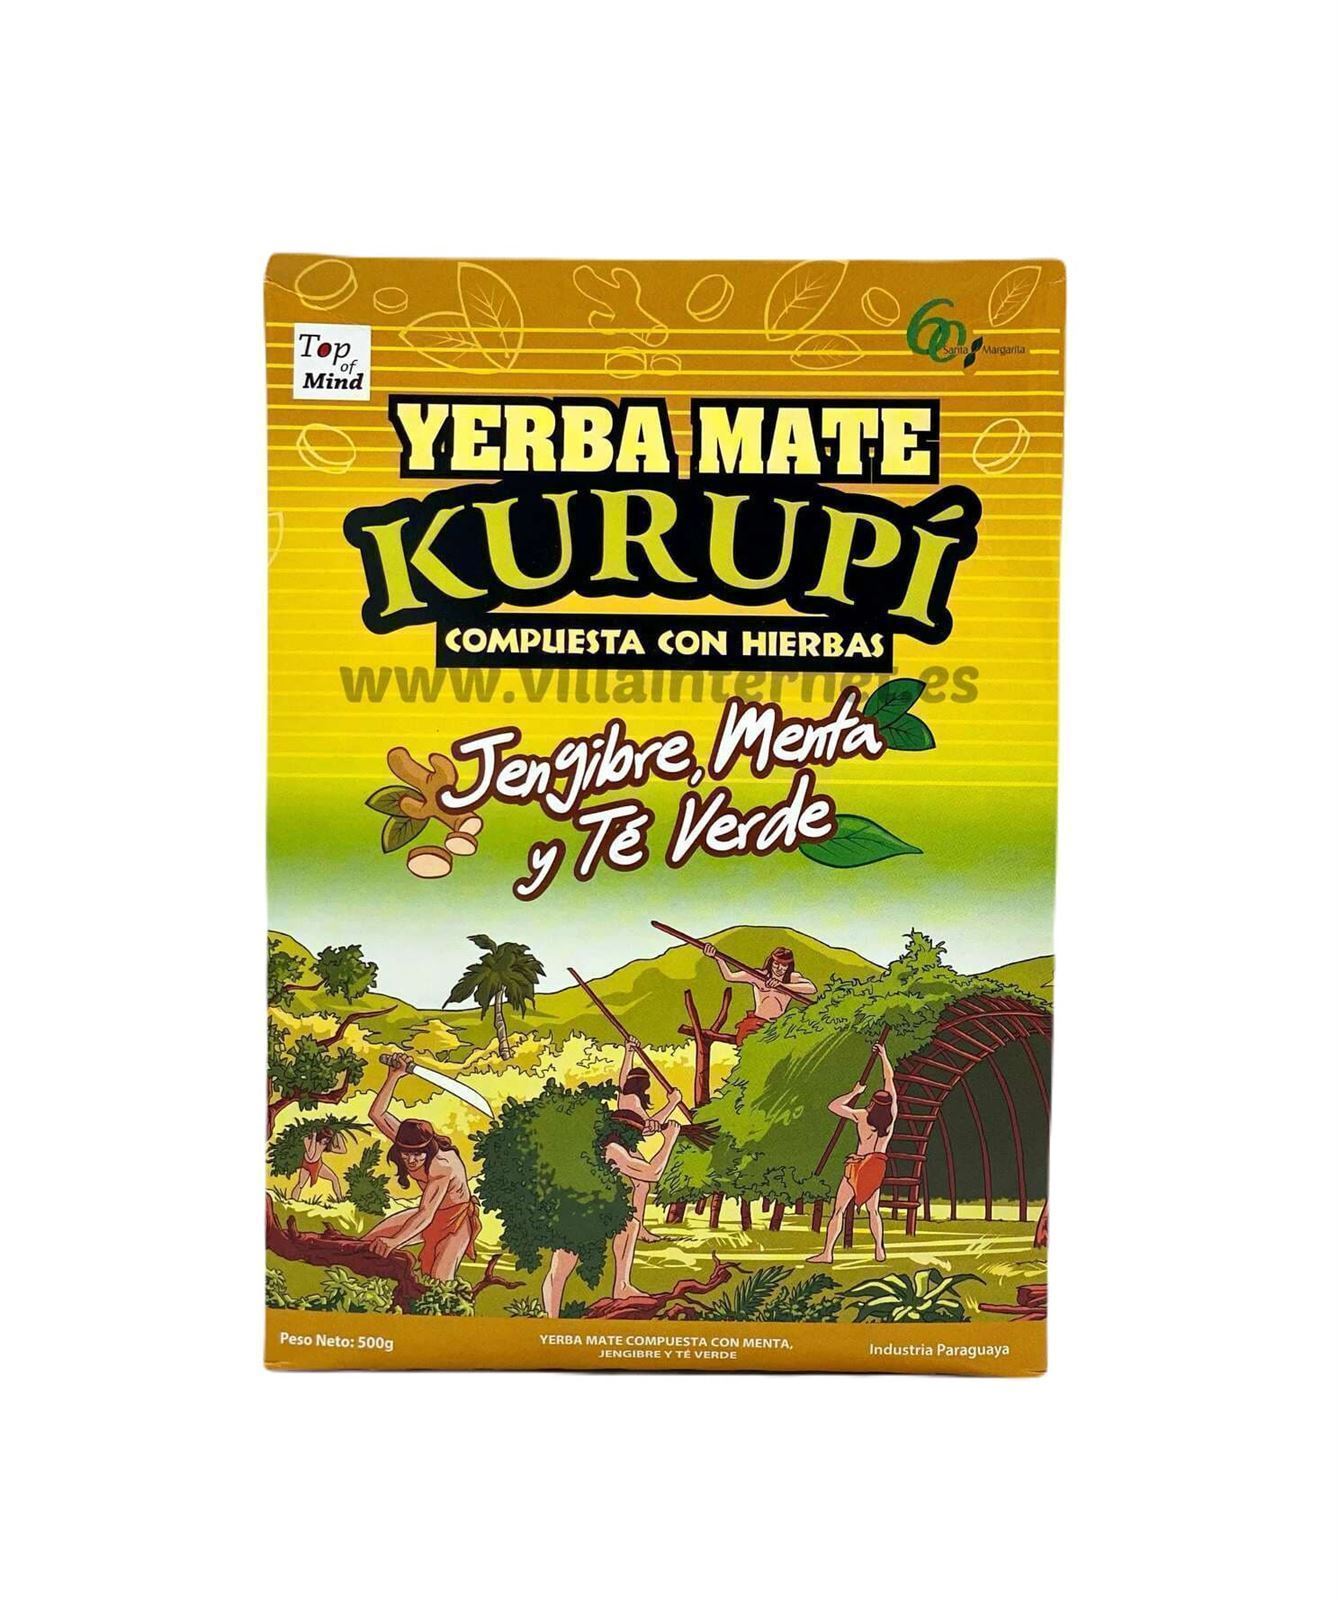 Yerba mate Kurupí jengibre, menta y té verde 500g - Imagen 1